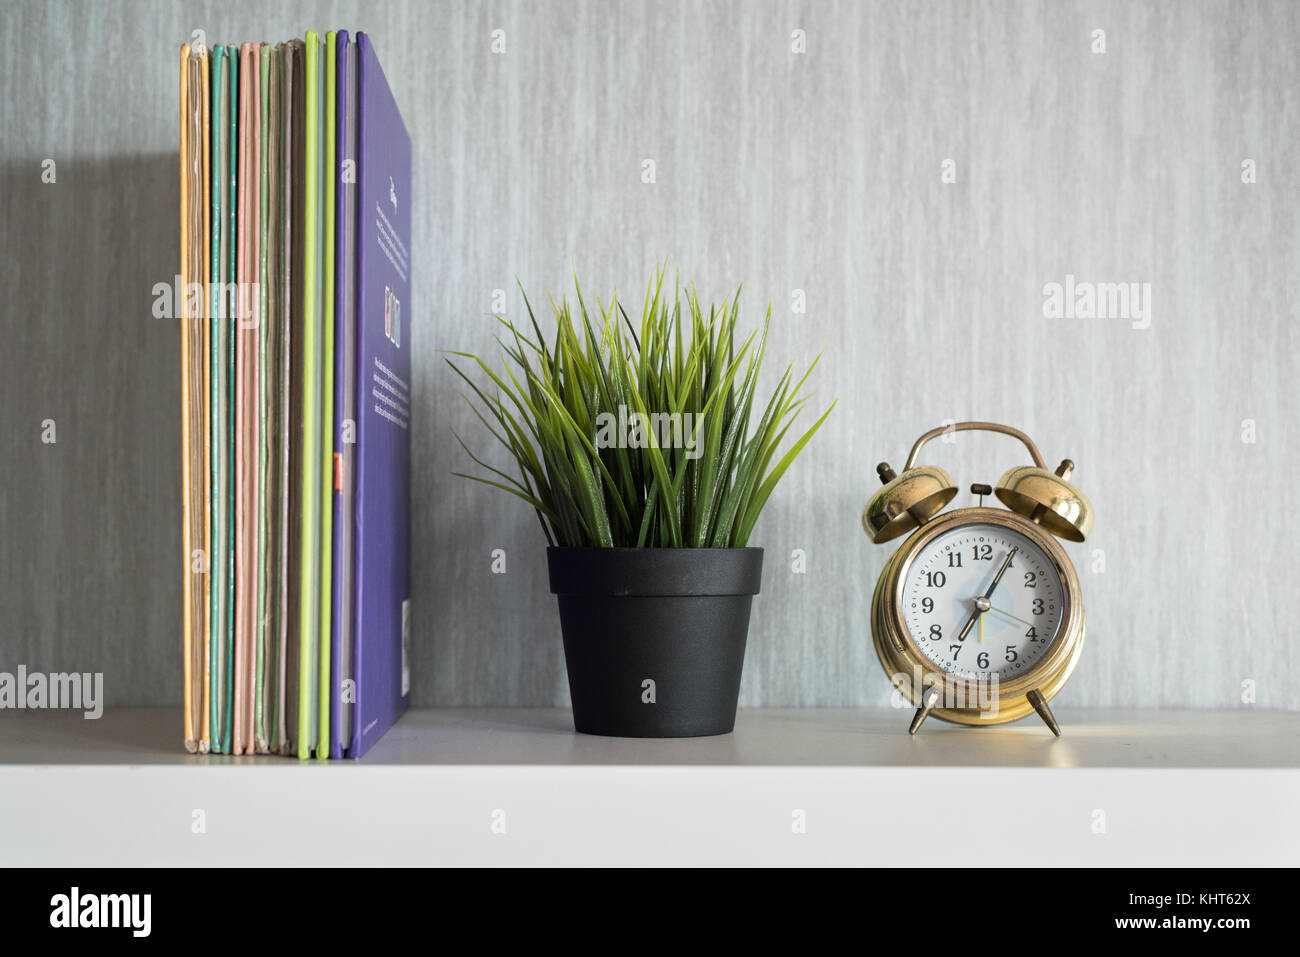 encyclopedia books, plant and alarm clock on white shelf - organized concept Stock Photo